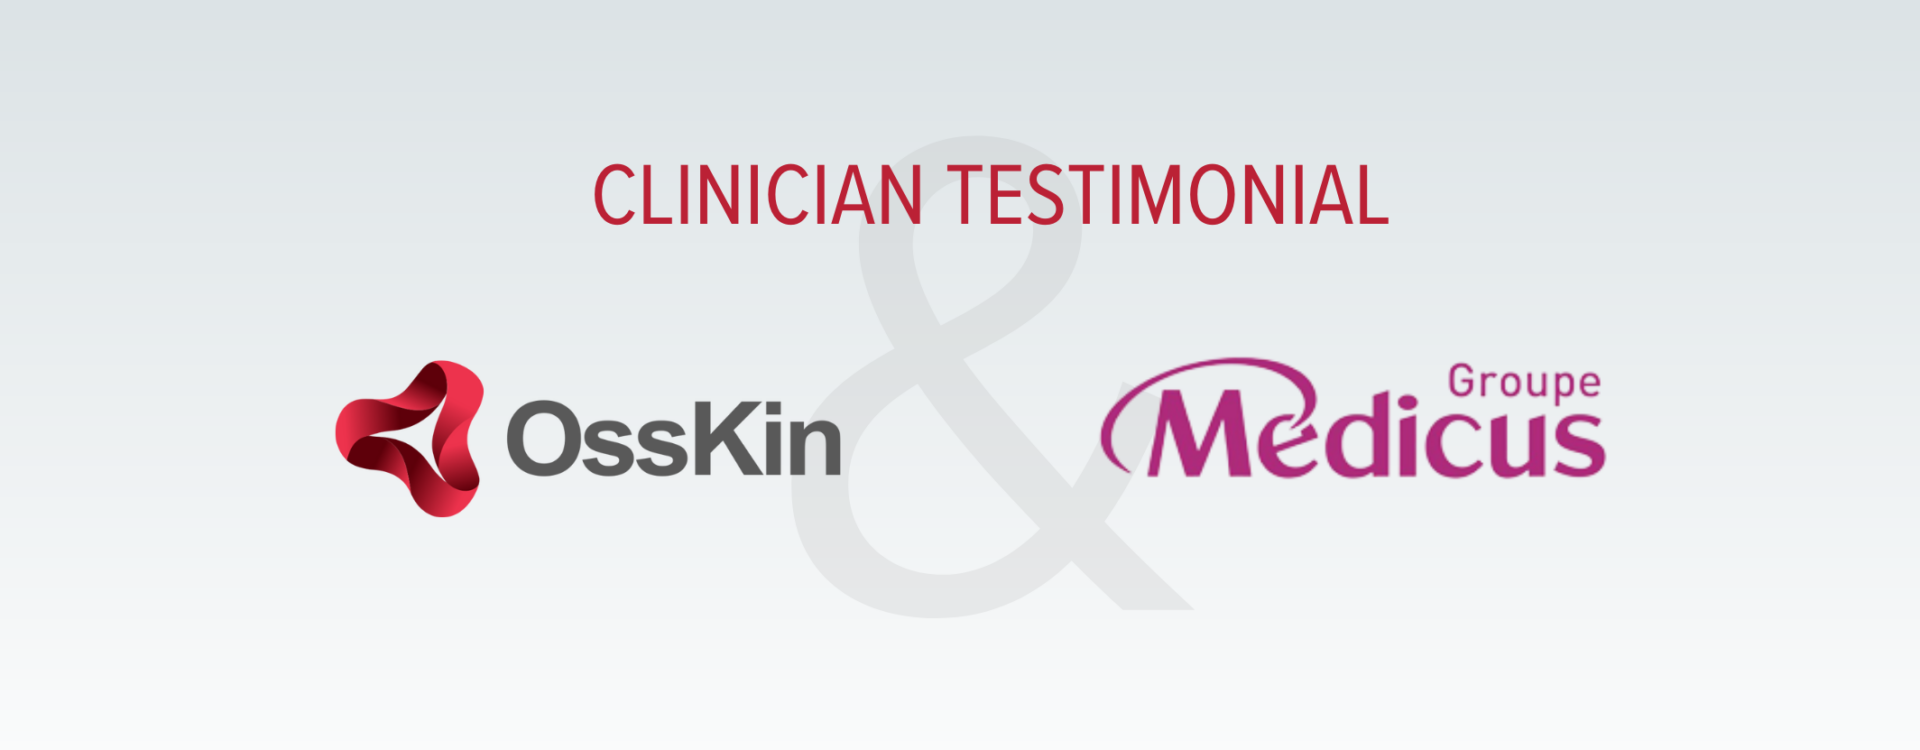 Clinician testimonials Medicus group